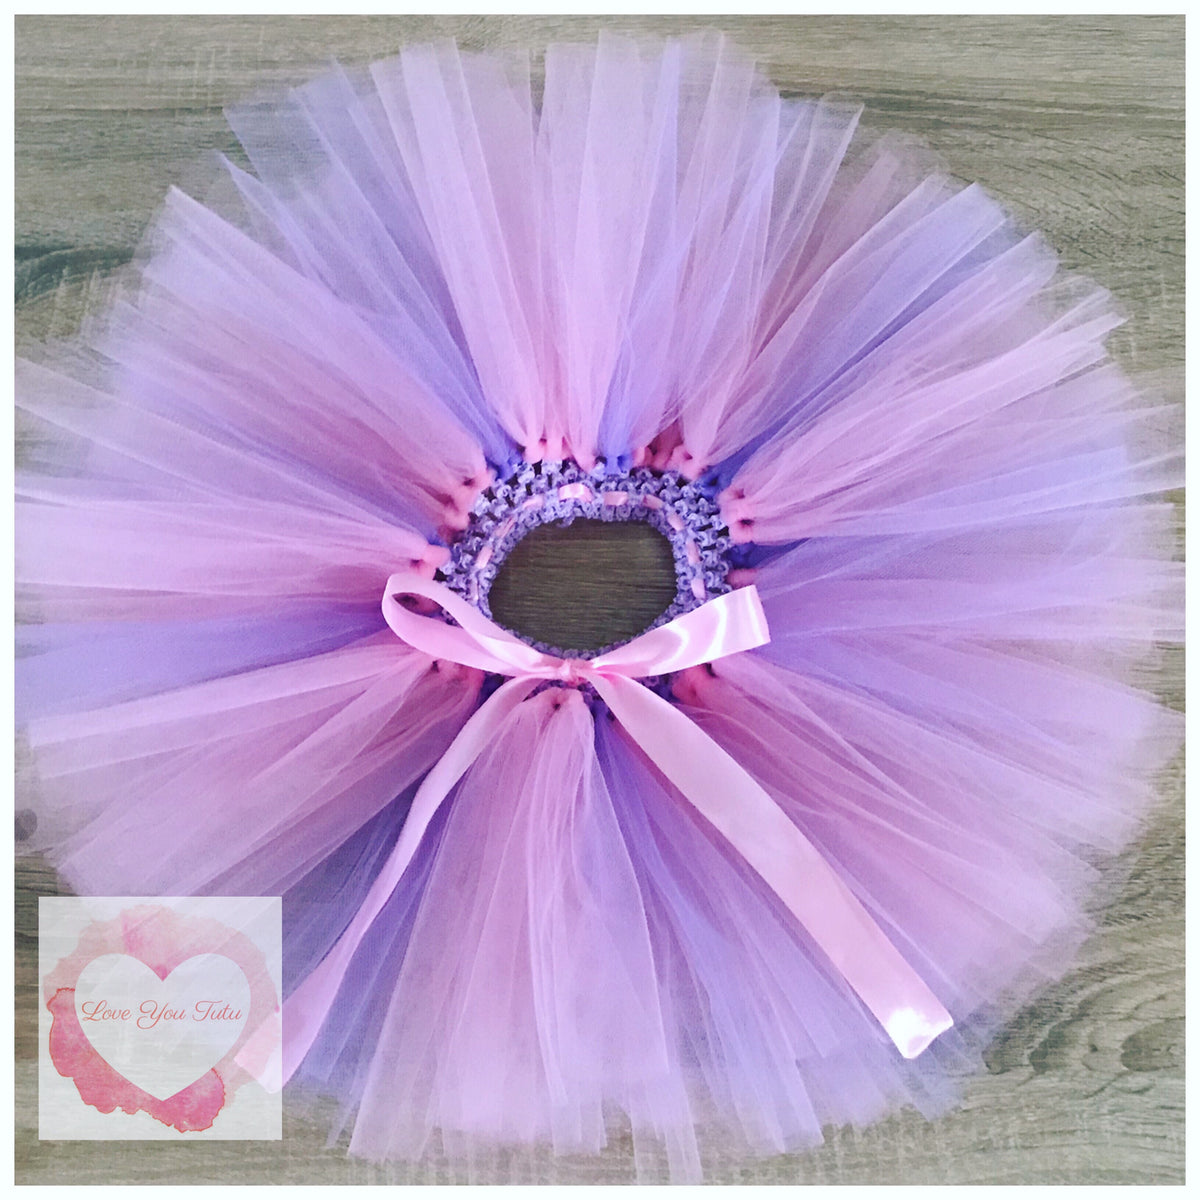 Pink and lavender short Tutu skirt – www.loveyoututu.com.au